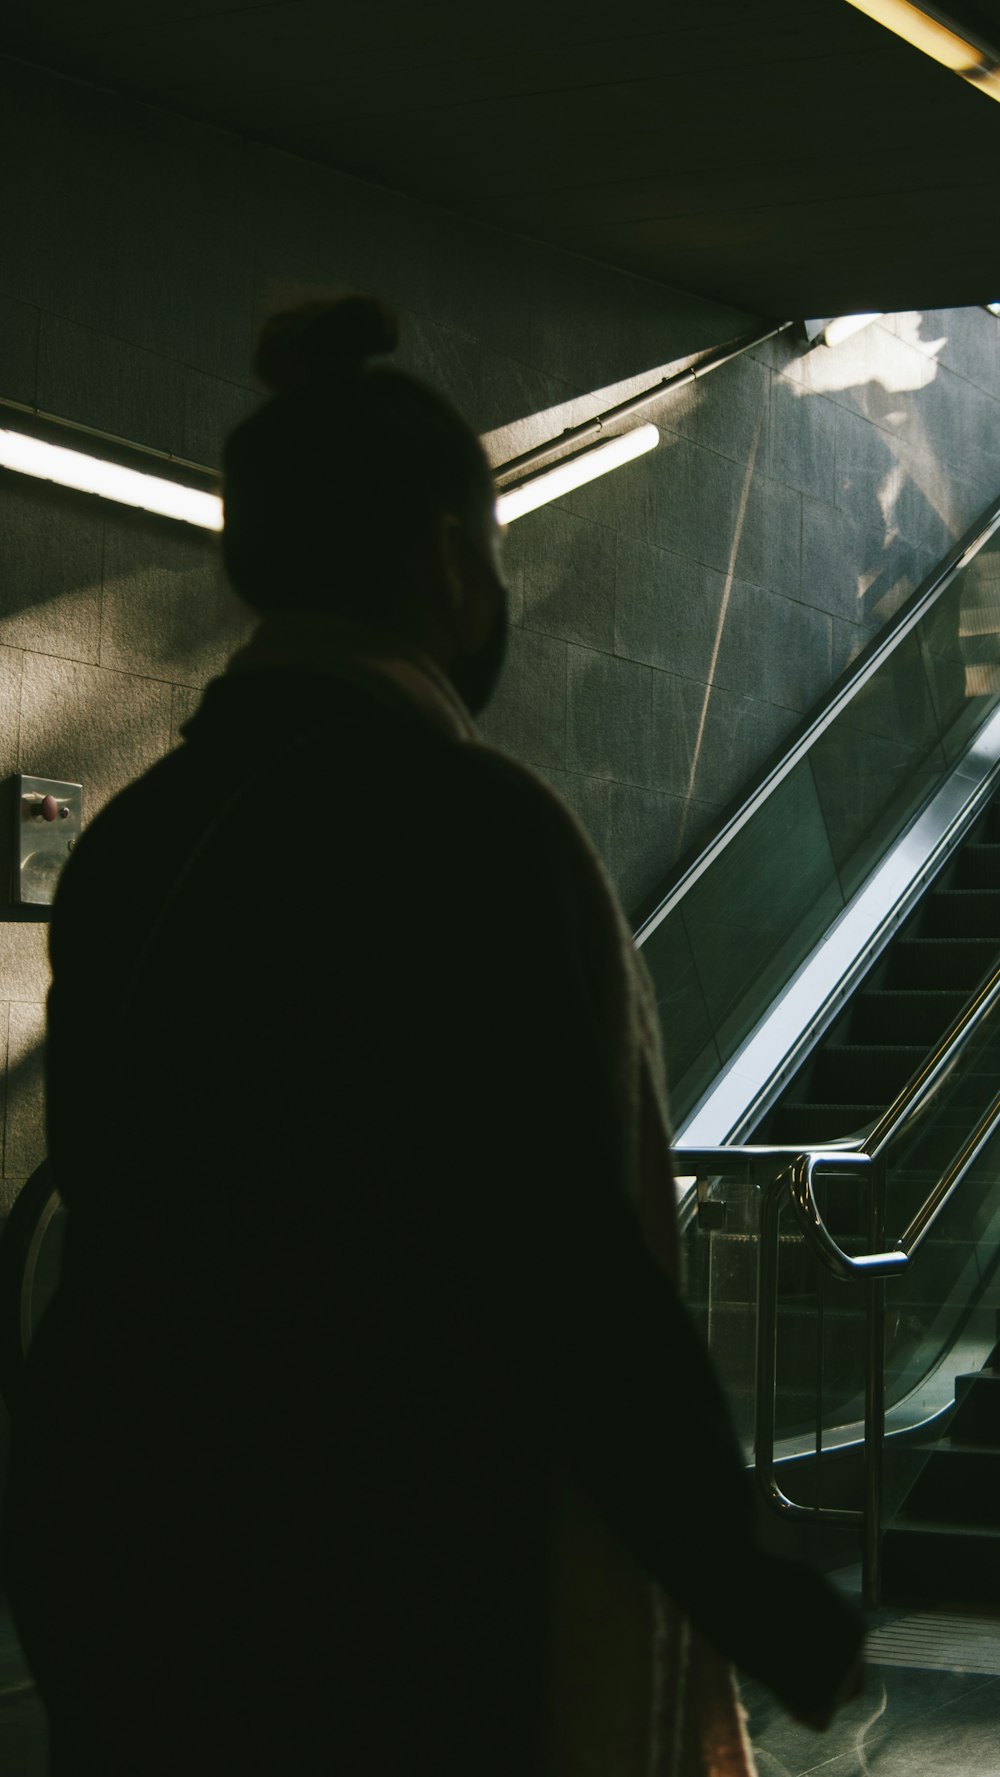 a man walking down an escalator next to an escalator